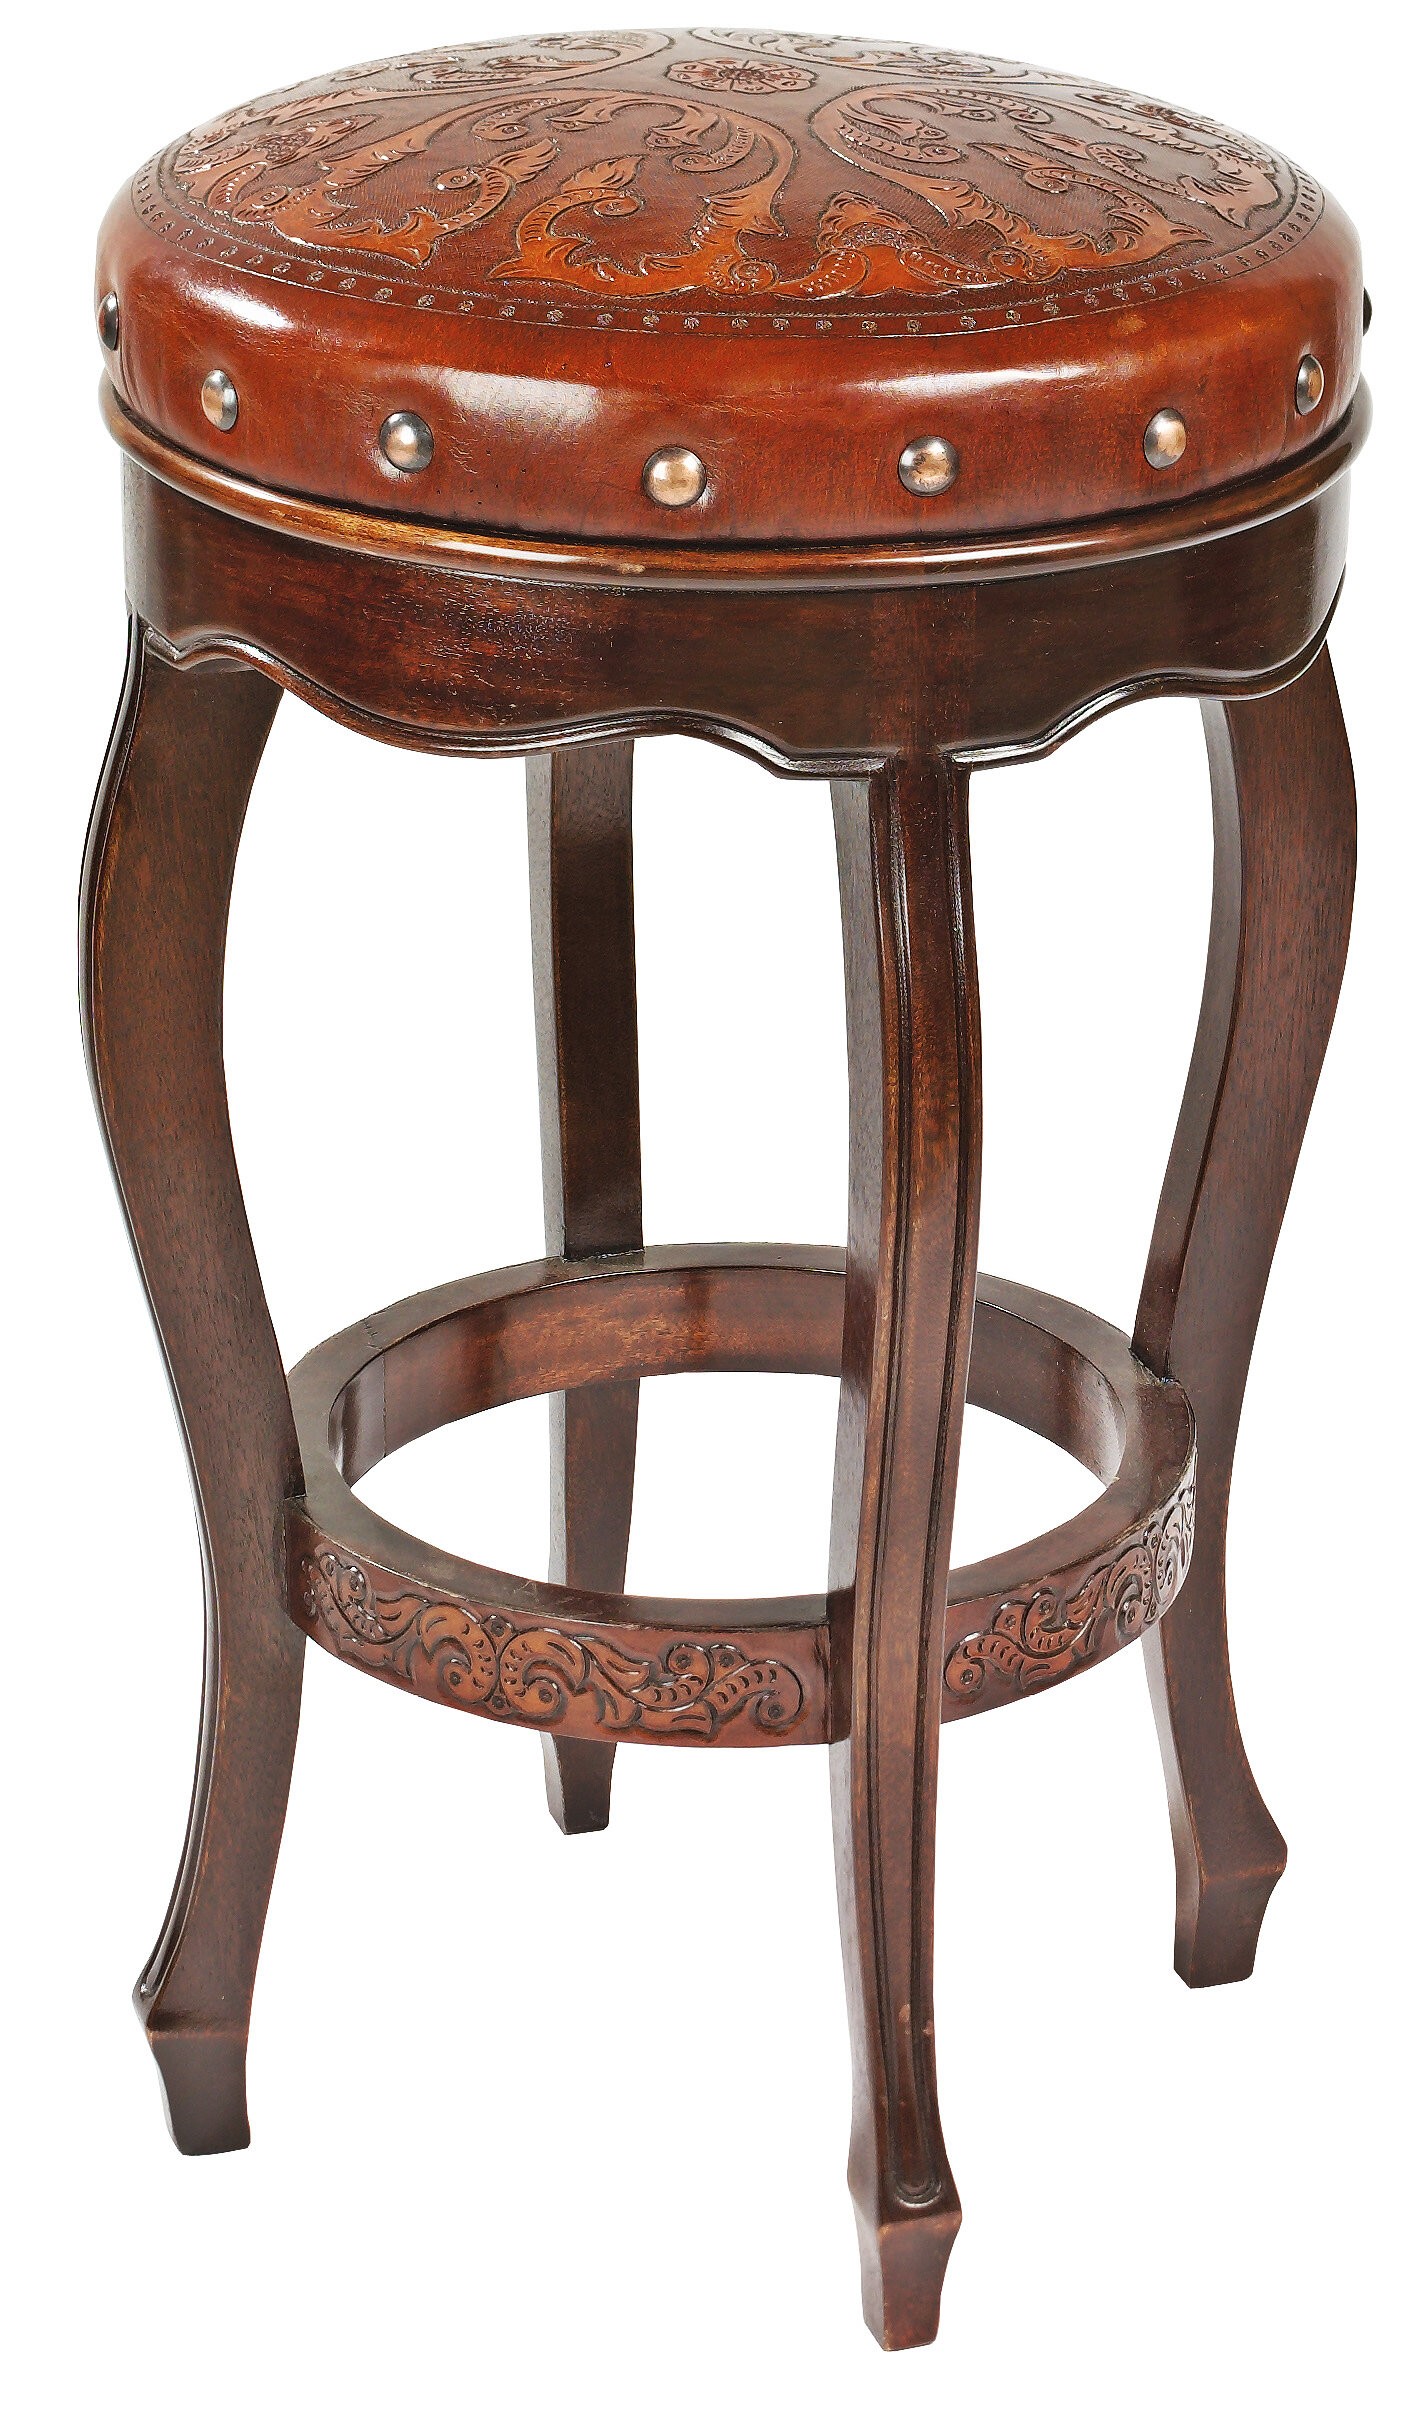 Tan leather bar stools